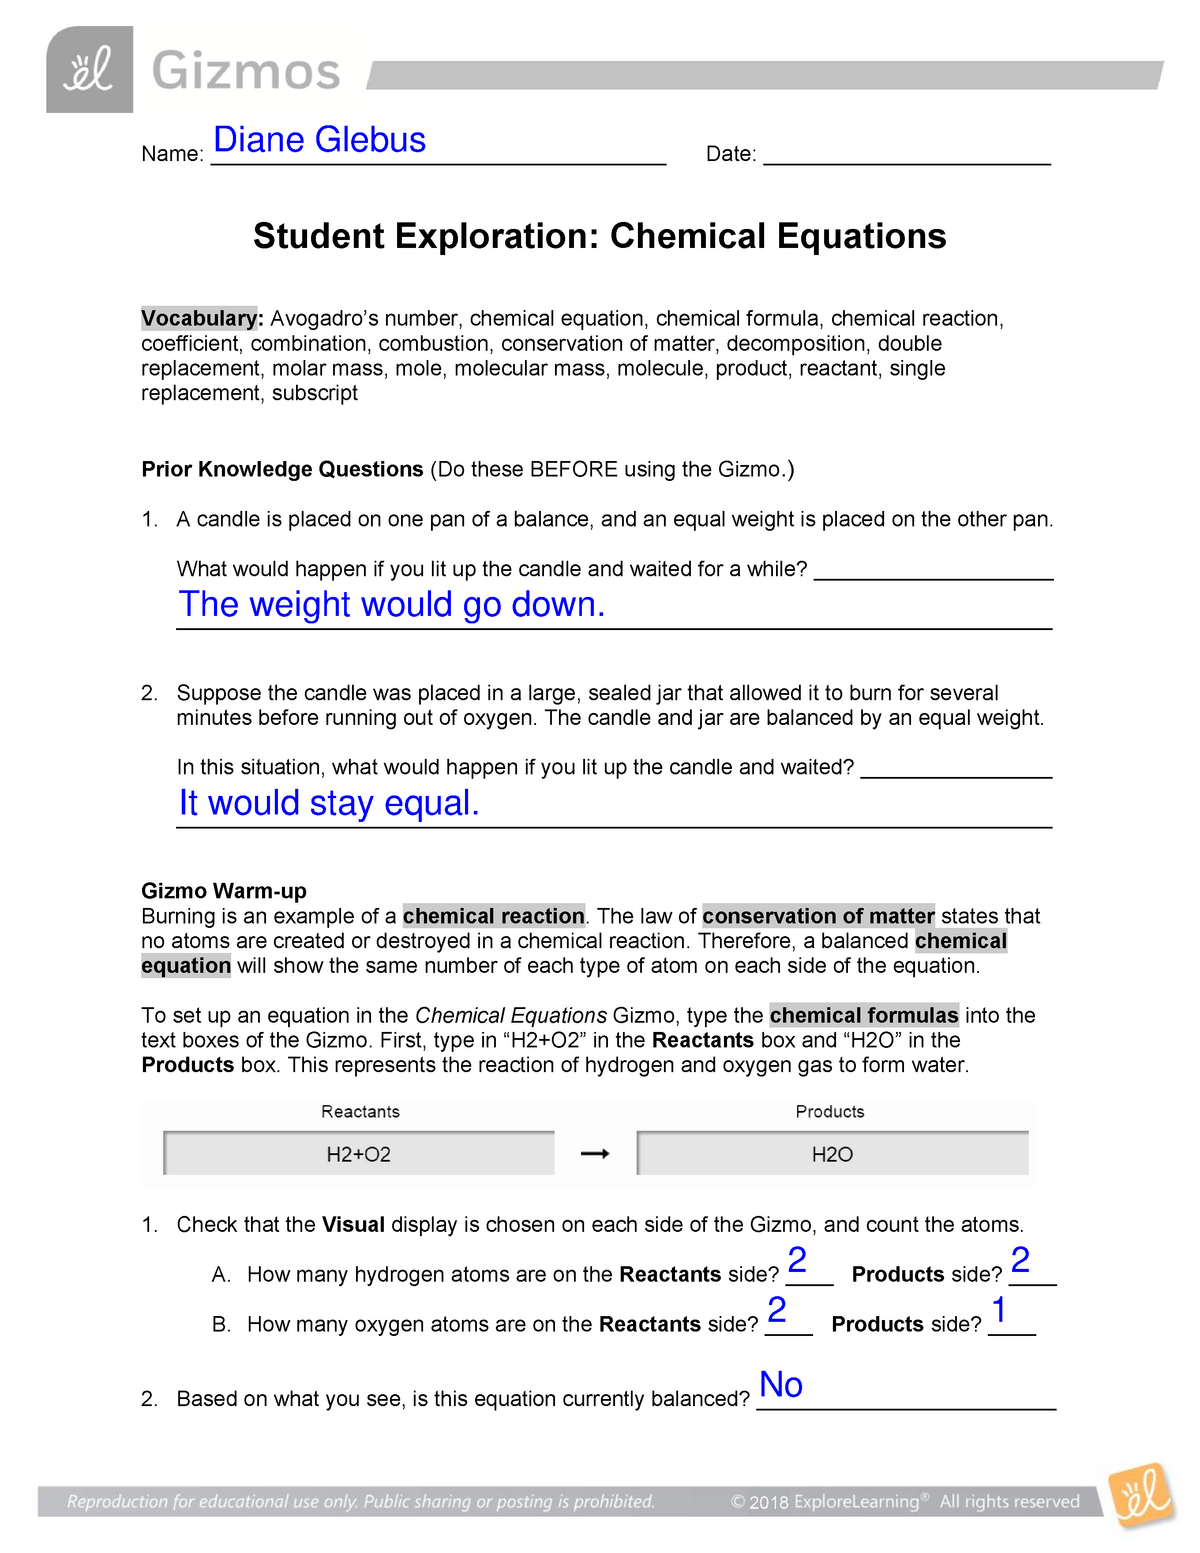 chem-equations-gizmo-virtual-assignment-name-date